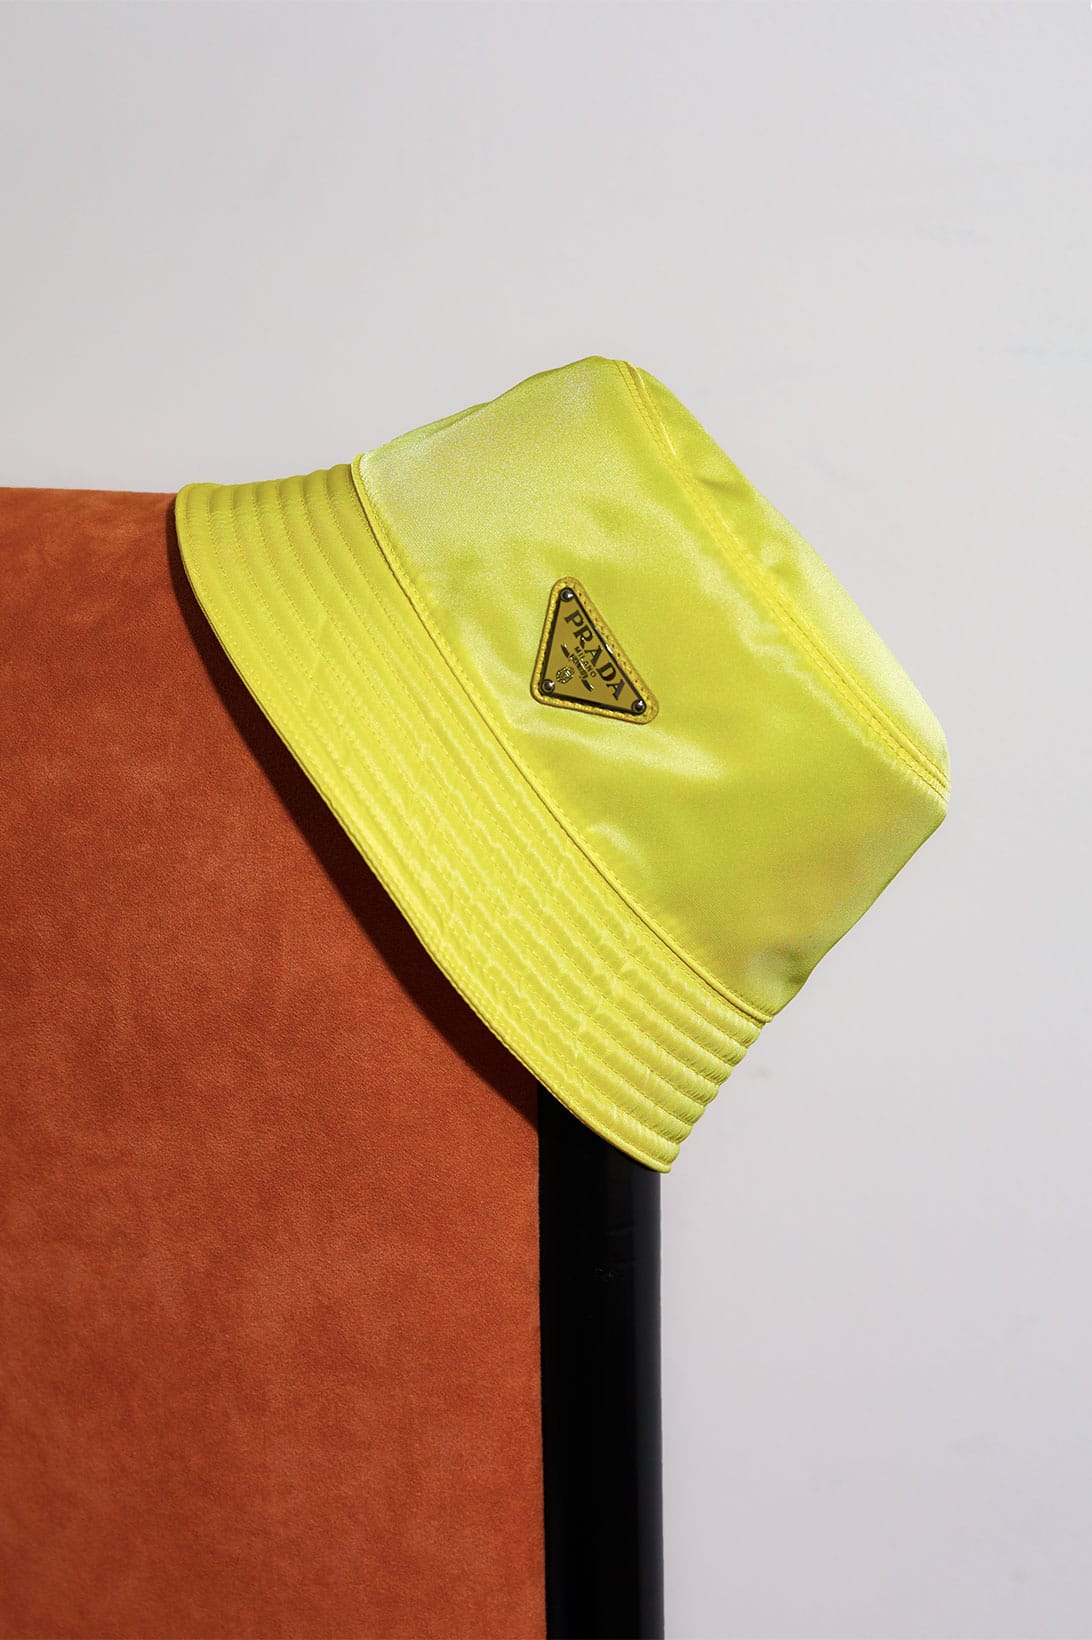 prada yellow bucket hat